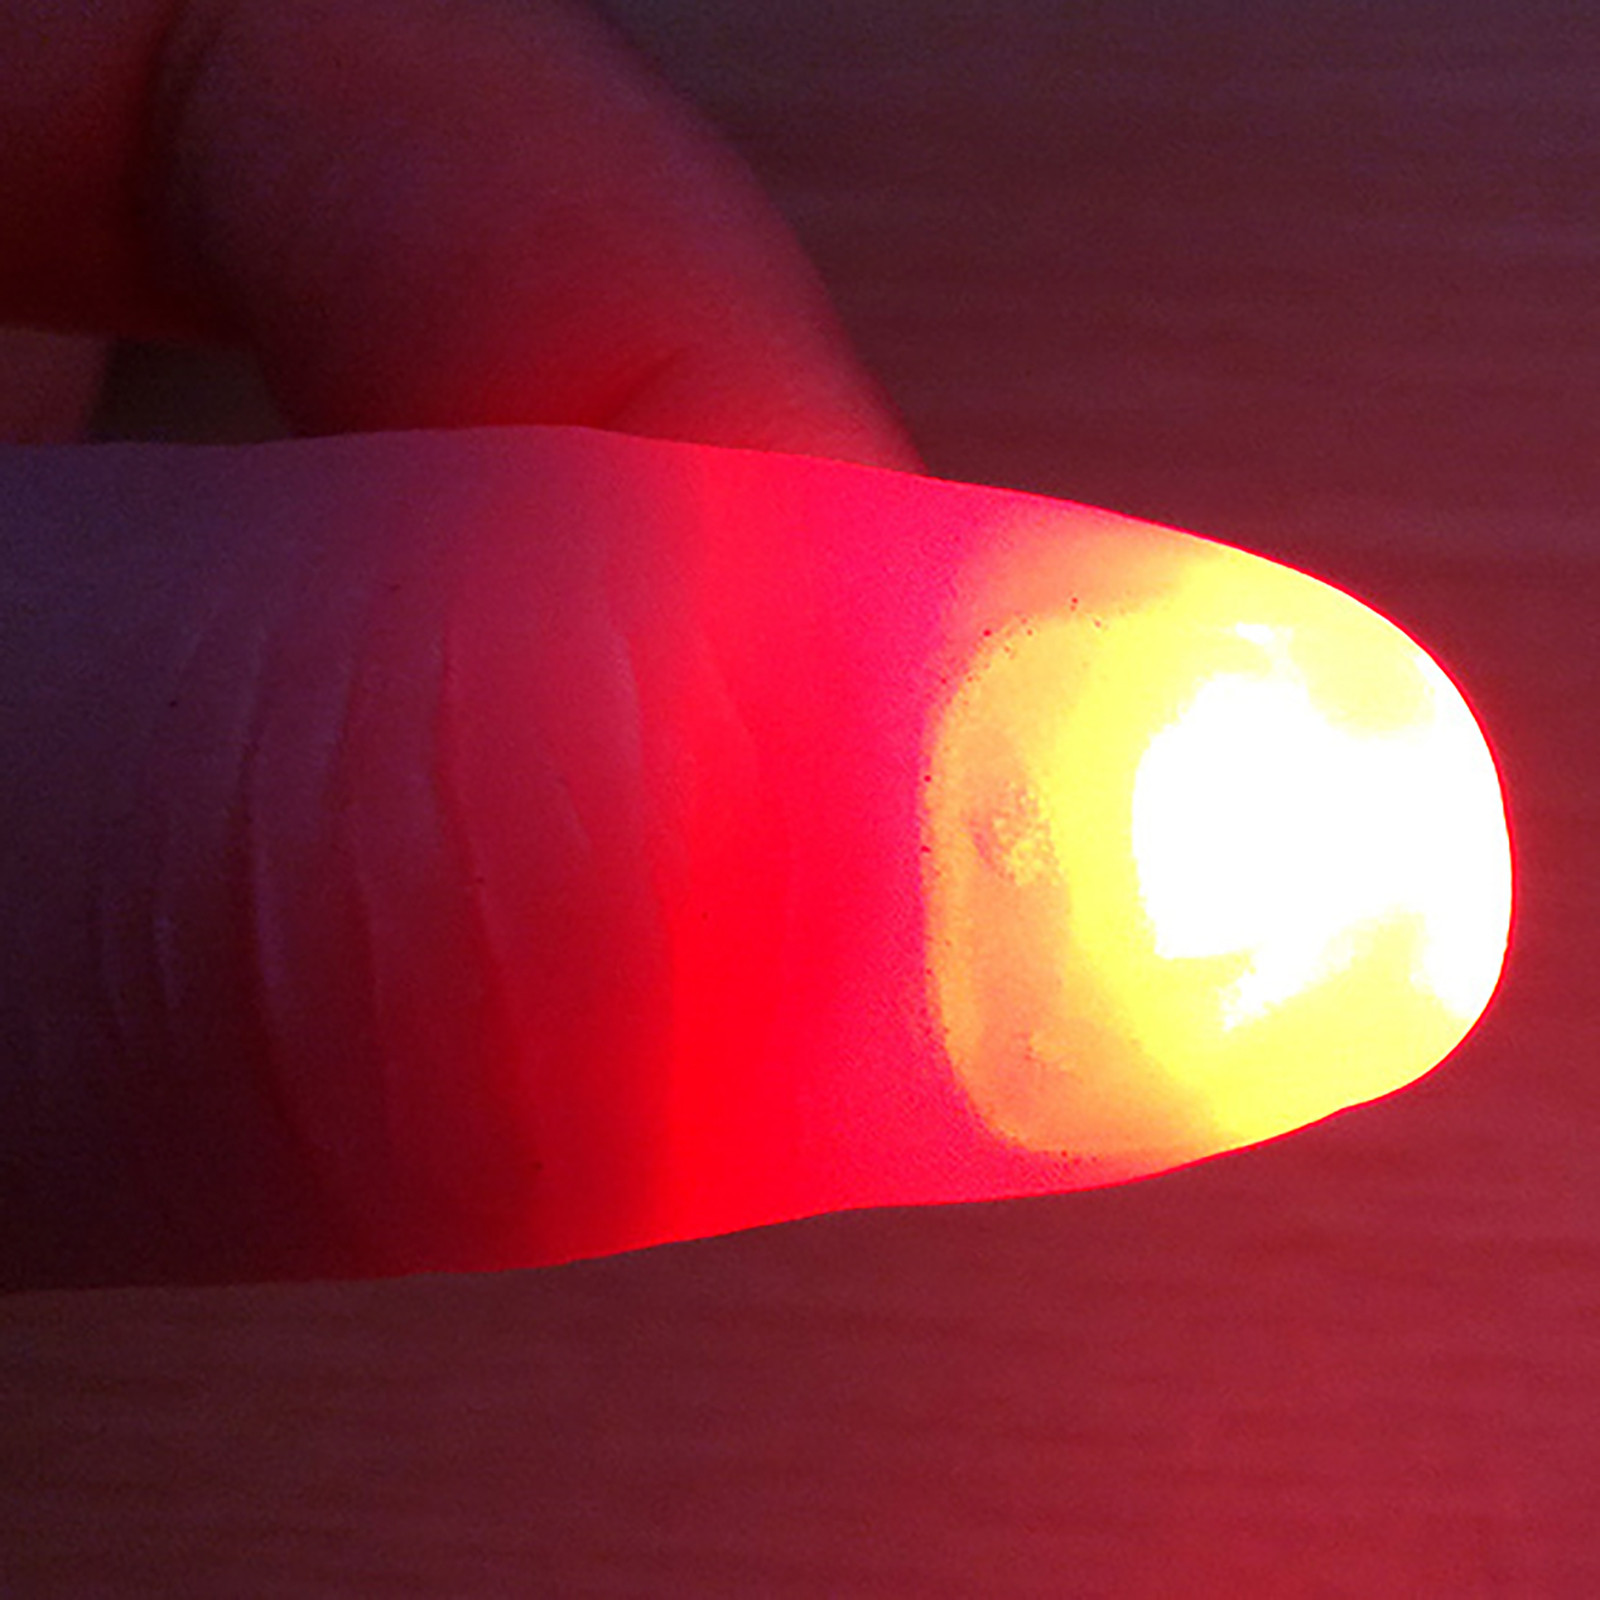 Luminous Toys LED Finger Light Rings Glow Magic Flashing Close Up Trick Classic Parent Child Interactive